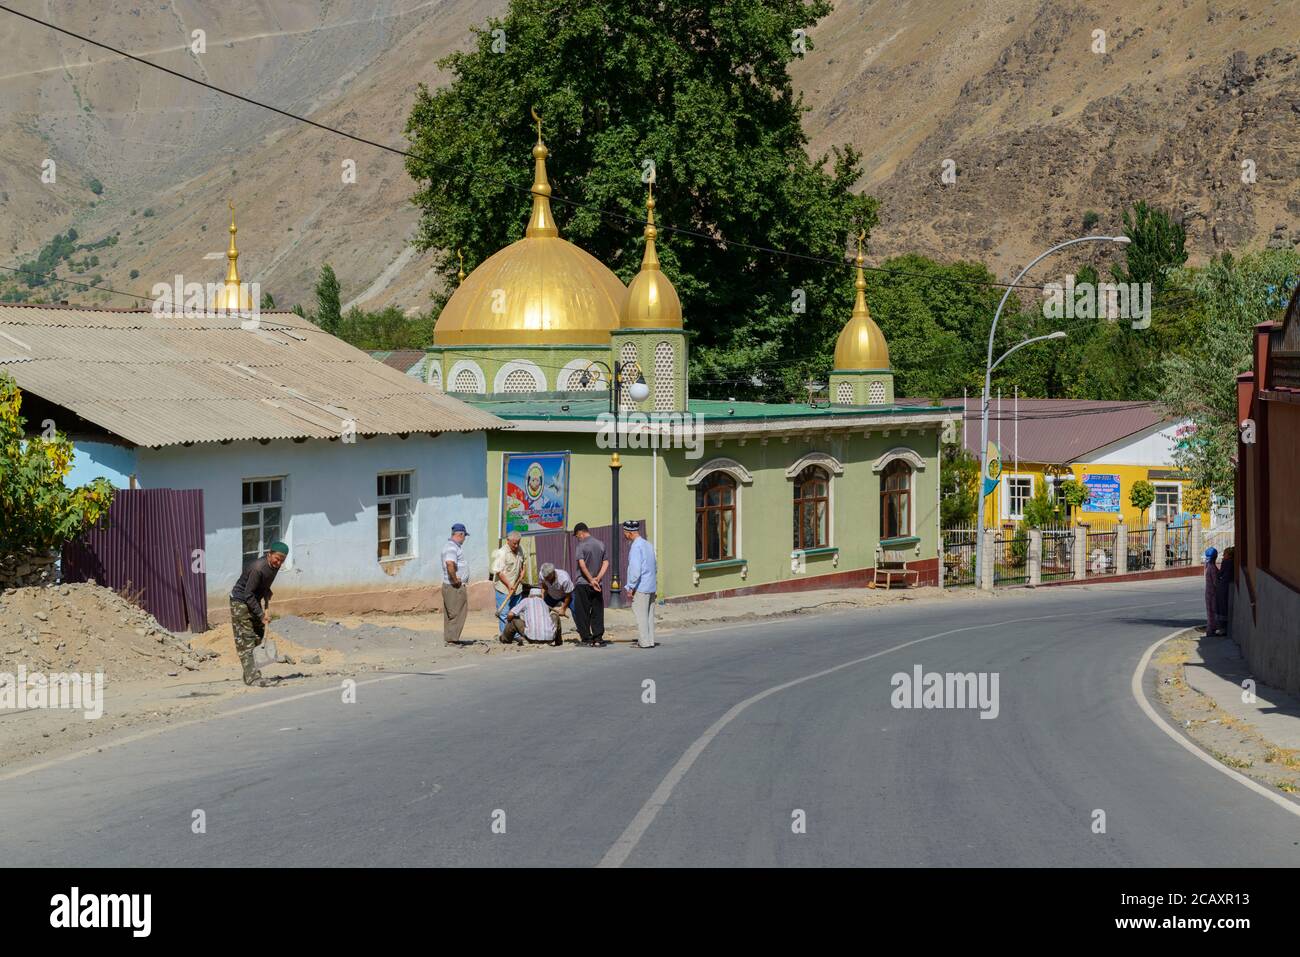 Men at work on the street near the mosque in Qal'ai Khumb, Tajikistan Stock Photo